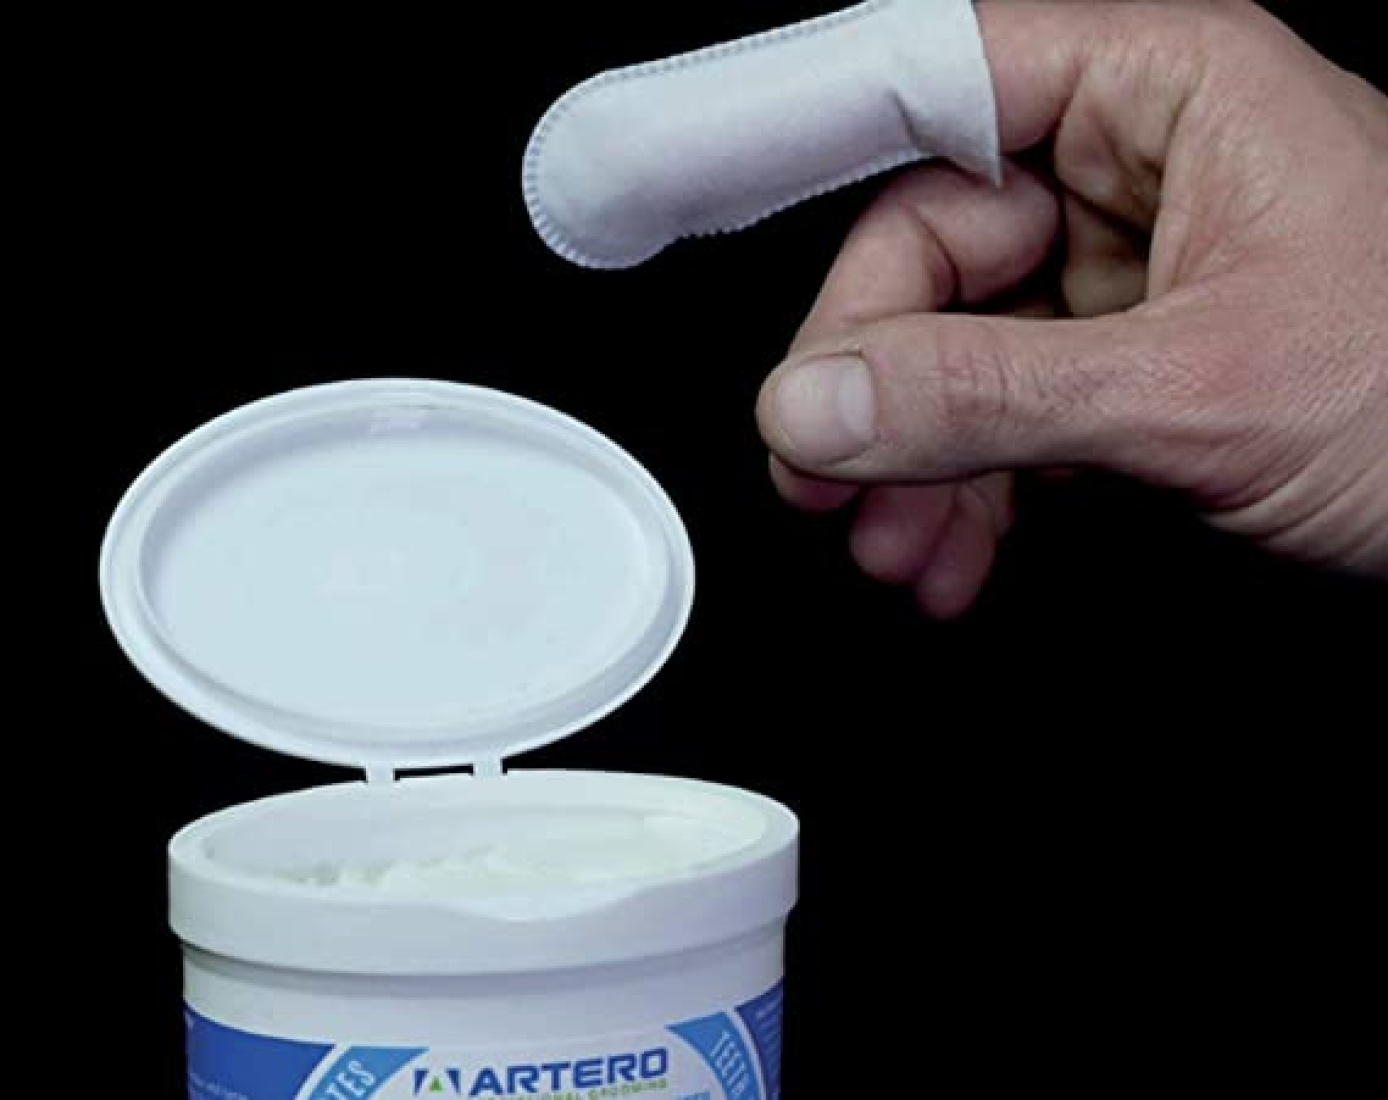 Artero Teeth Cleaning Wipes